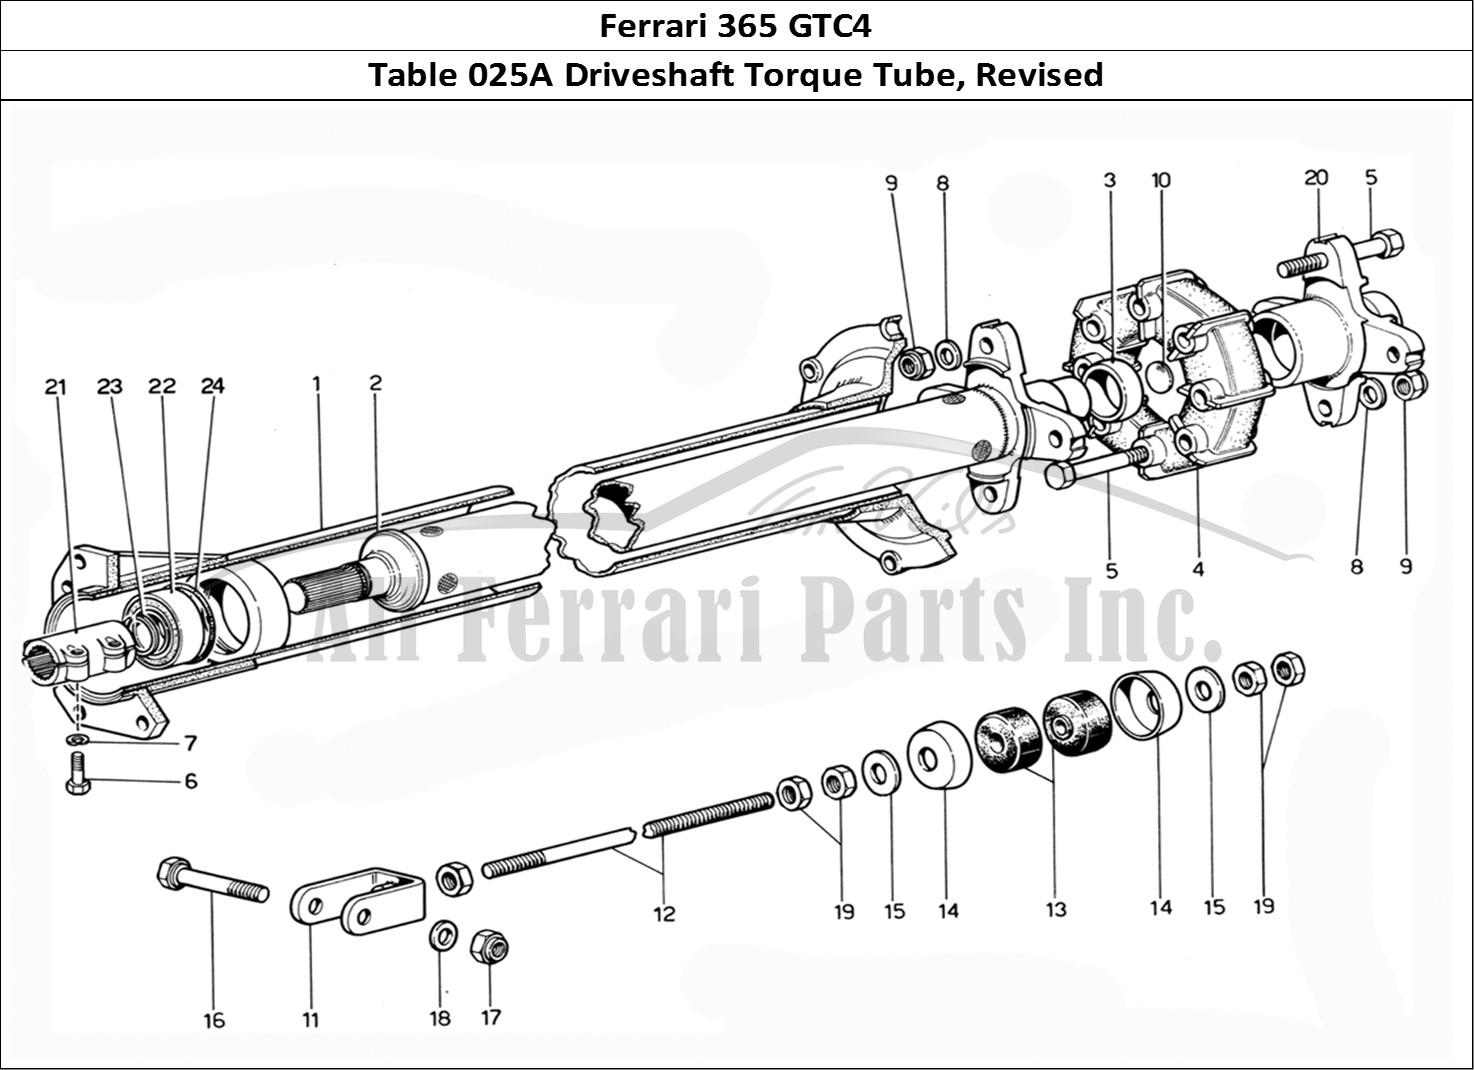 Ferrari Parts Ferrari 365 GTC4 (Mechanical) Page 025 Torque tube - Revision